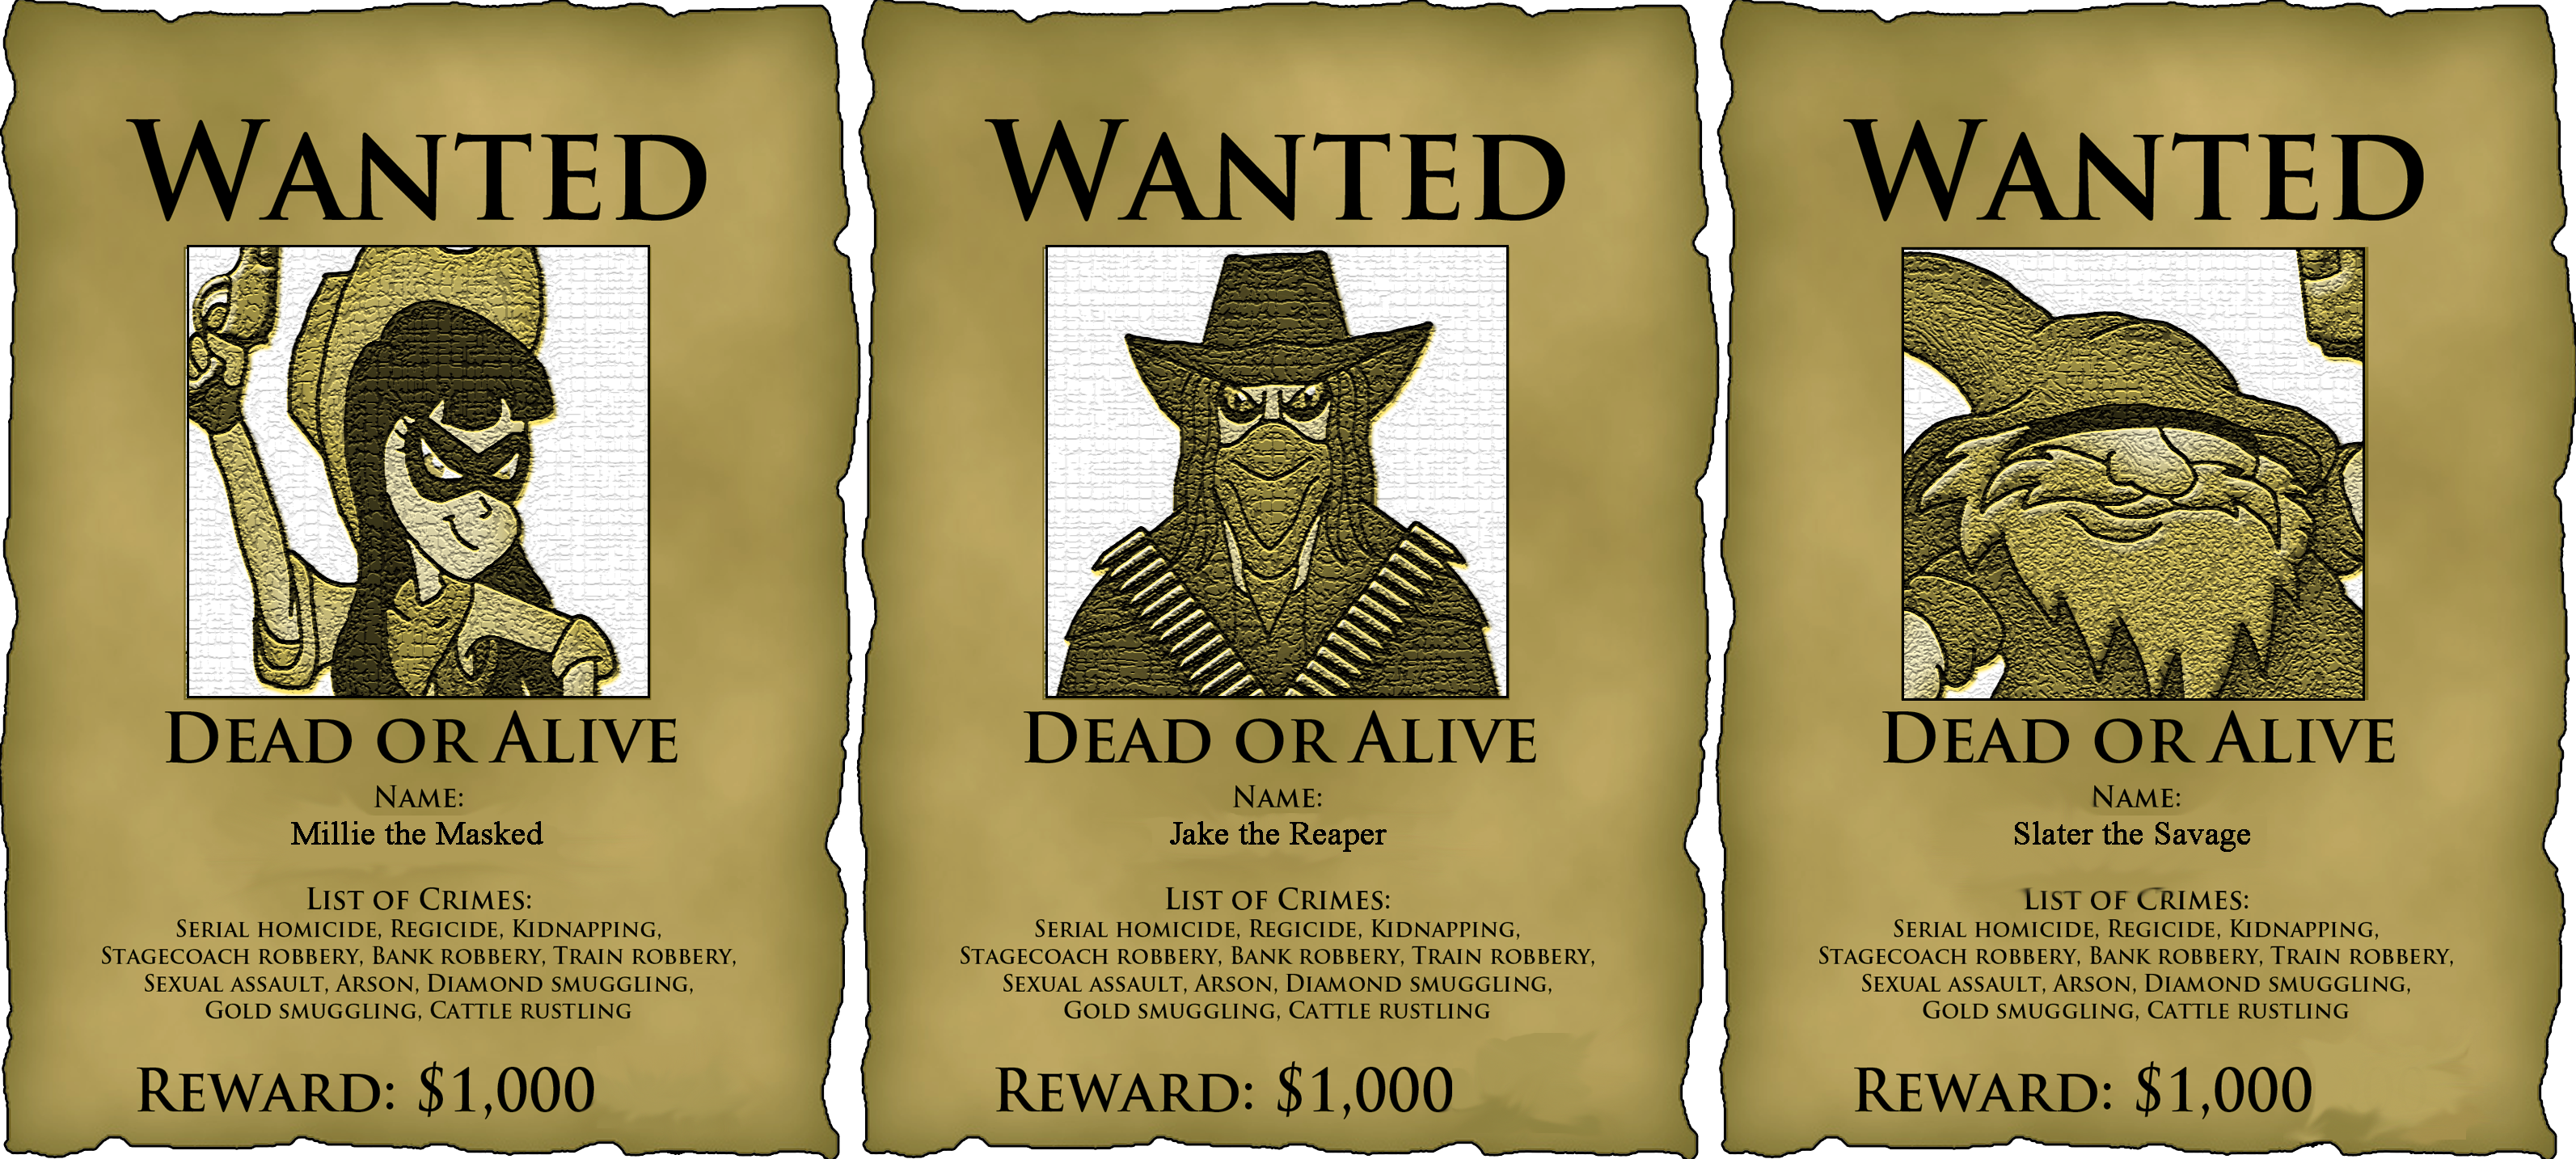 Wanted плакат. Плакат розыска. Плакат разыскивается дикий Запад. Wanted картинка. Island wanted